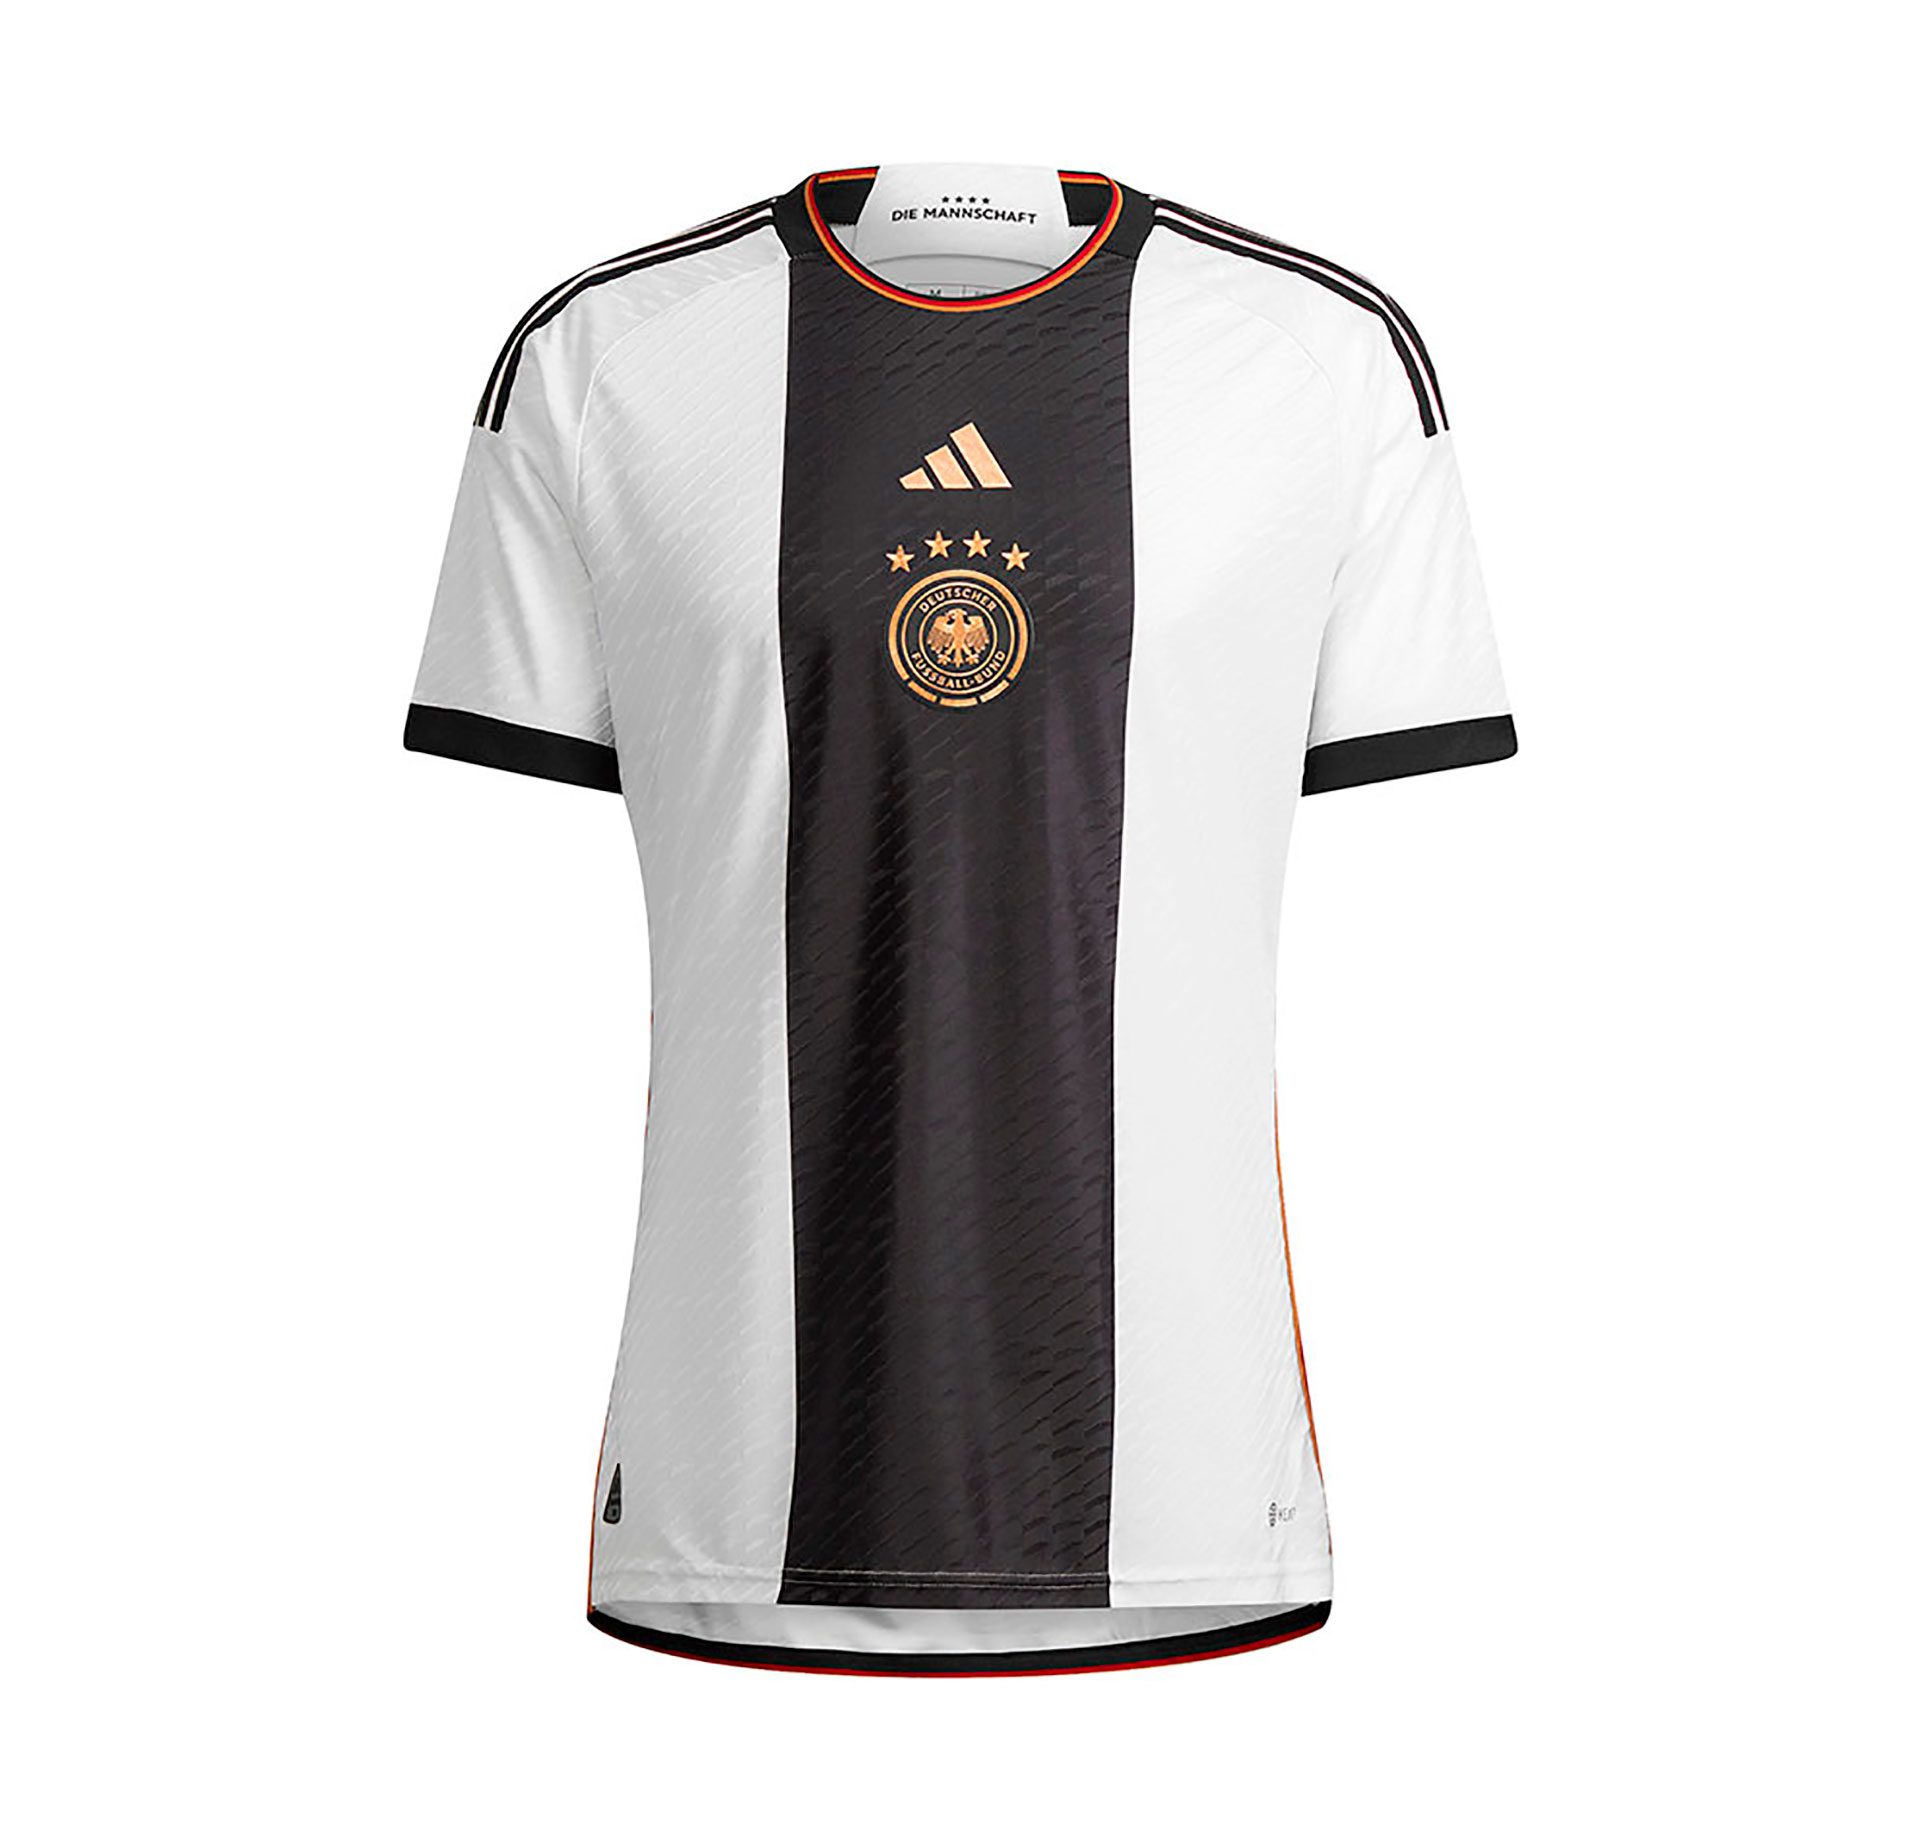 Germany national team shirt